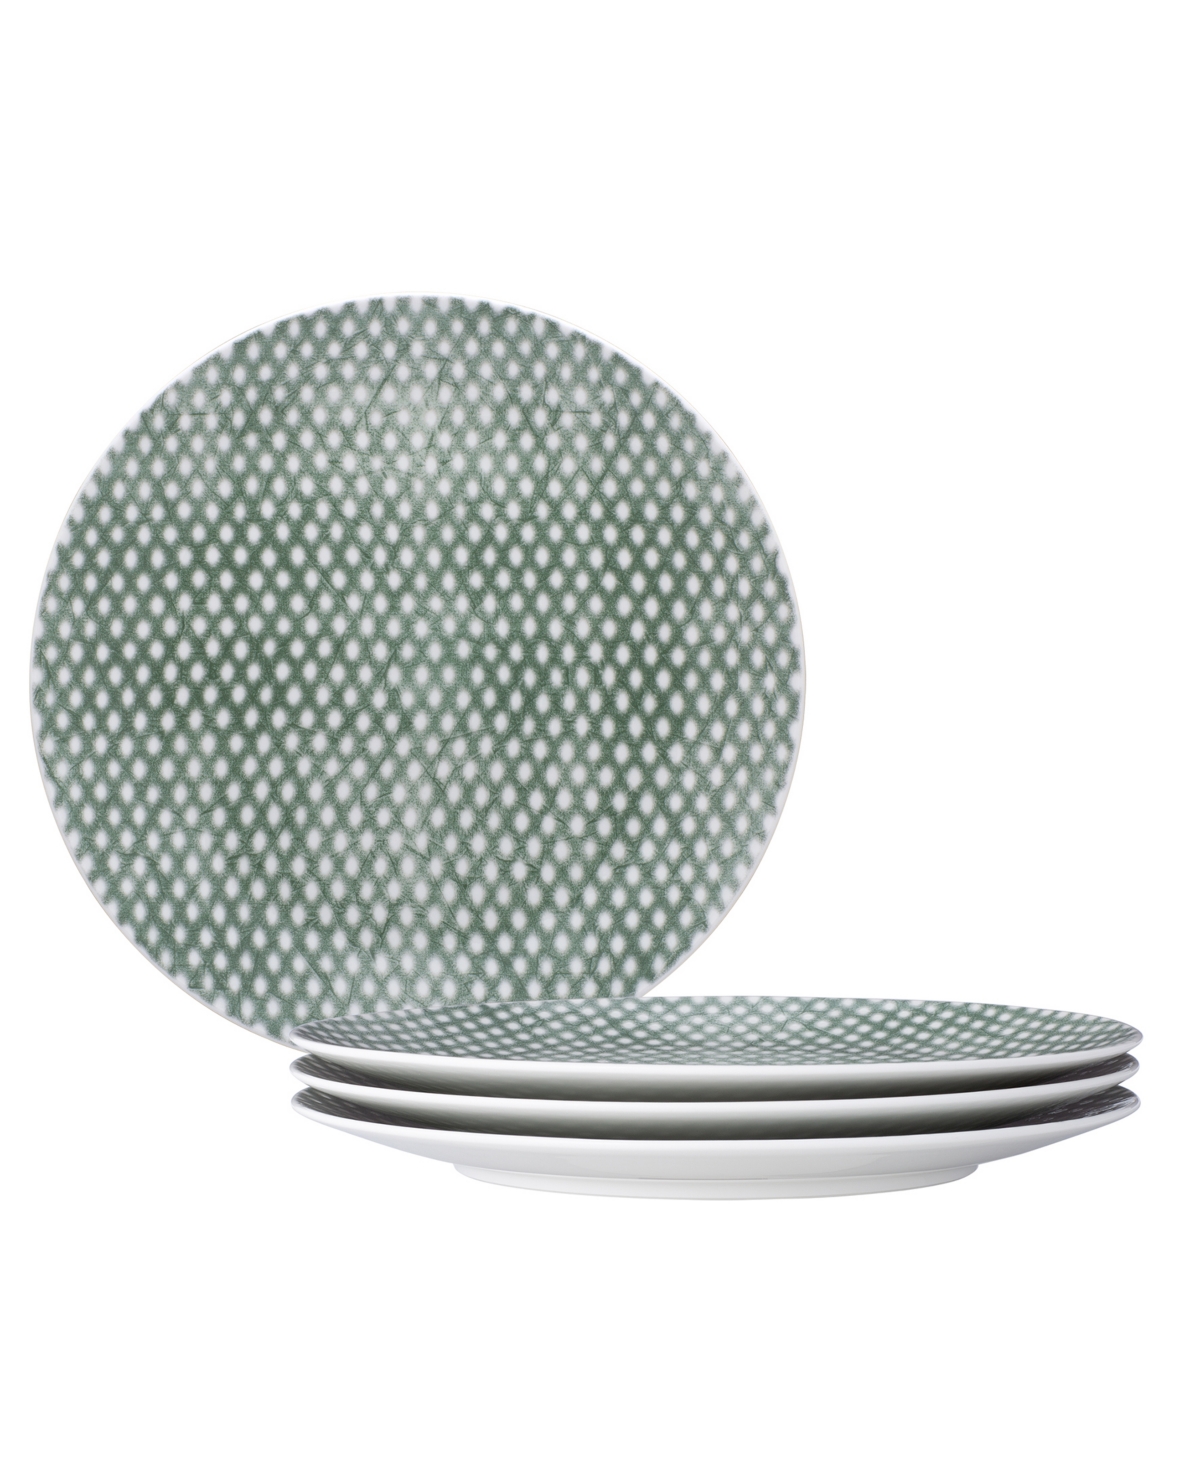 Hammock Dots Coupe Salad Plates, Set of 4 - Green